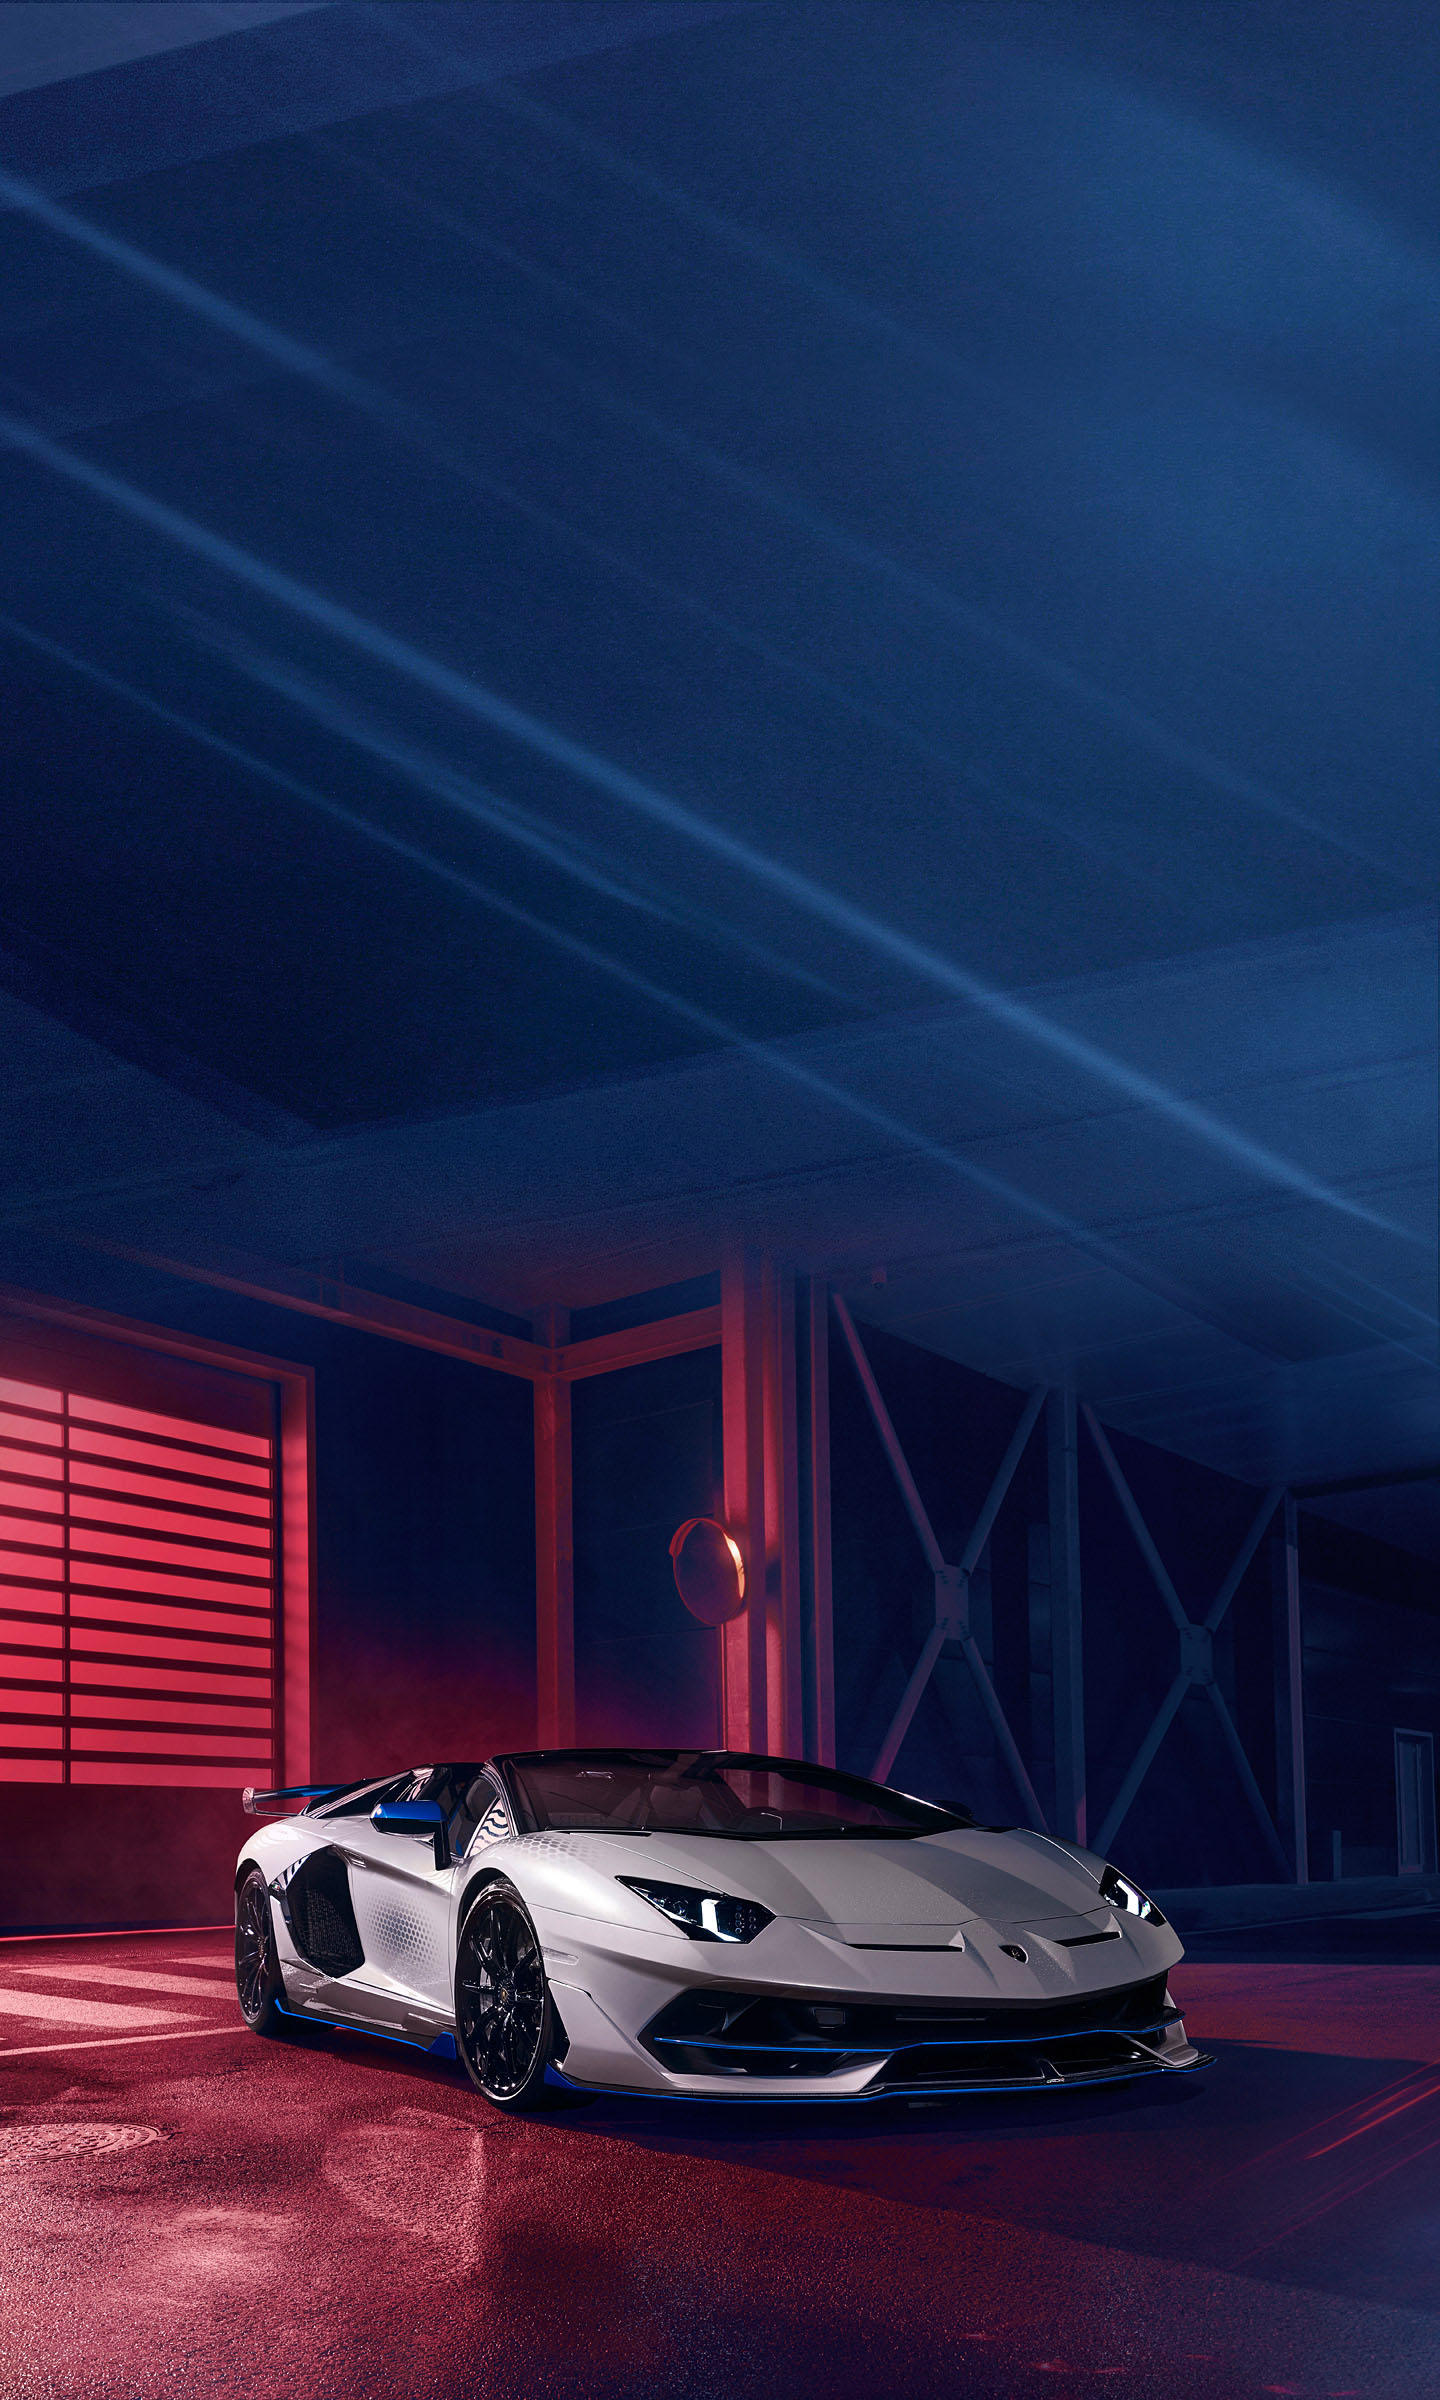  2020 Lamborghini Aventador SVJ Roadster Xago Edition Wallpaper.